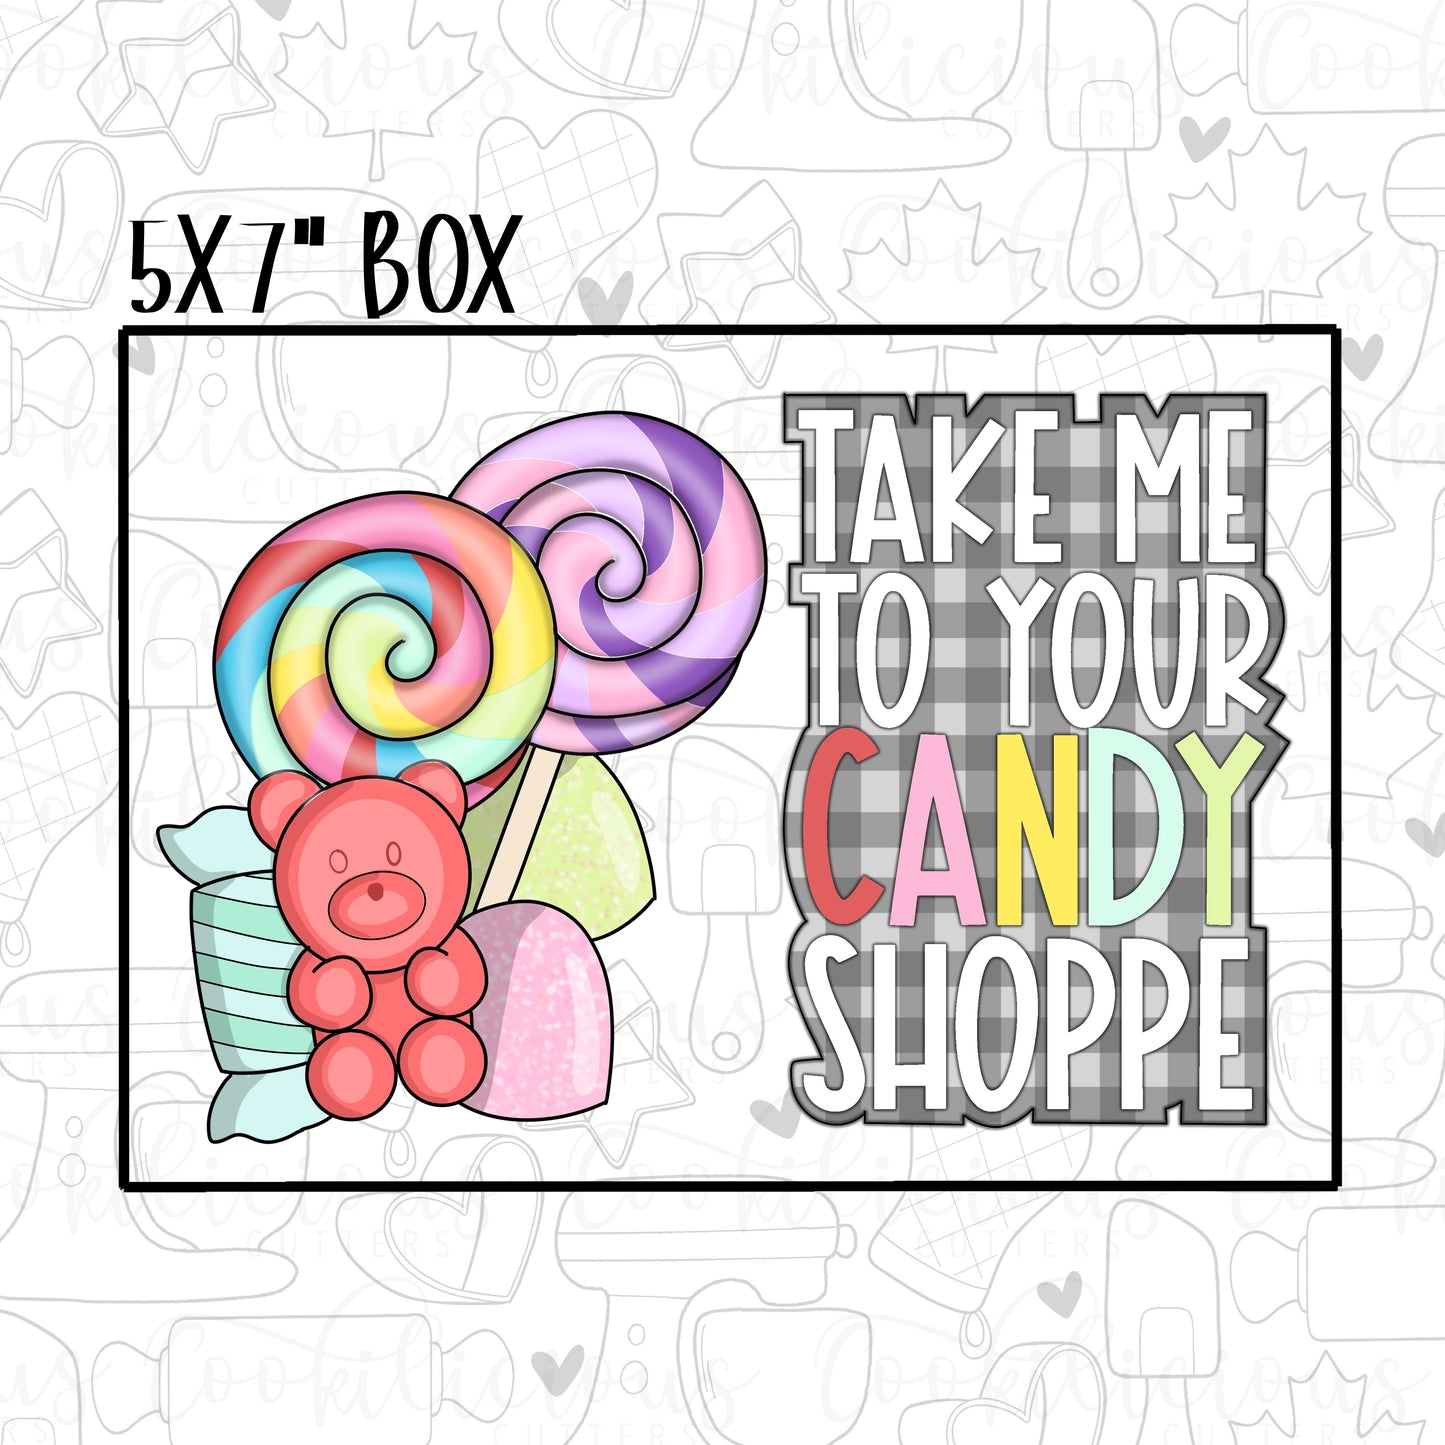 Candy Shoppe Set